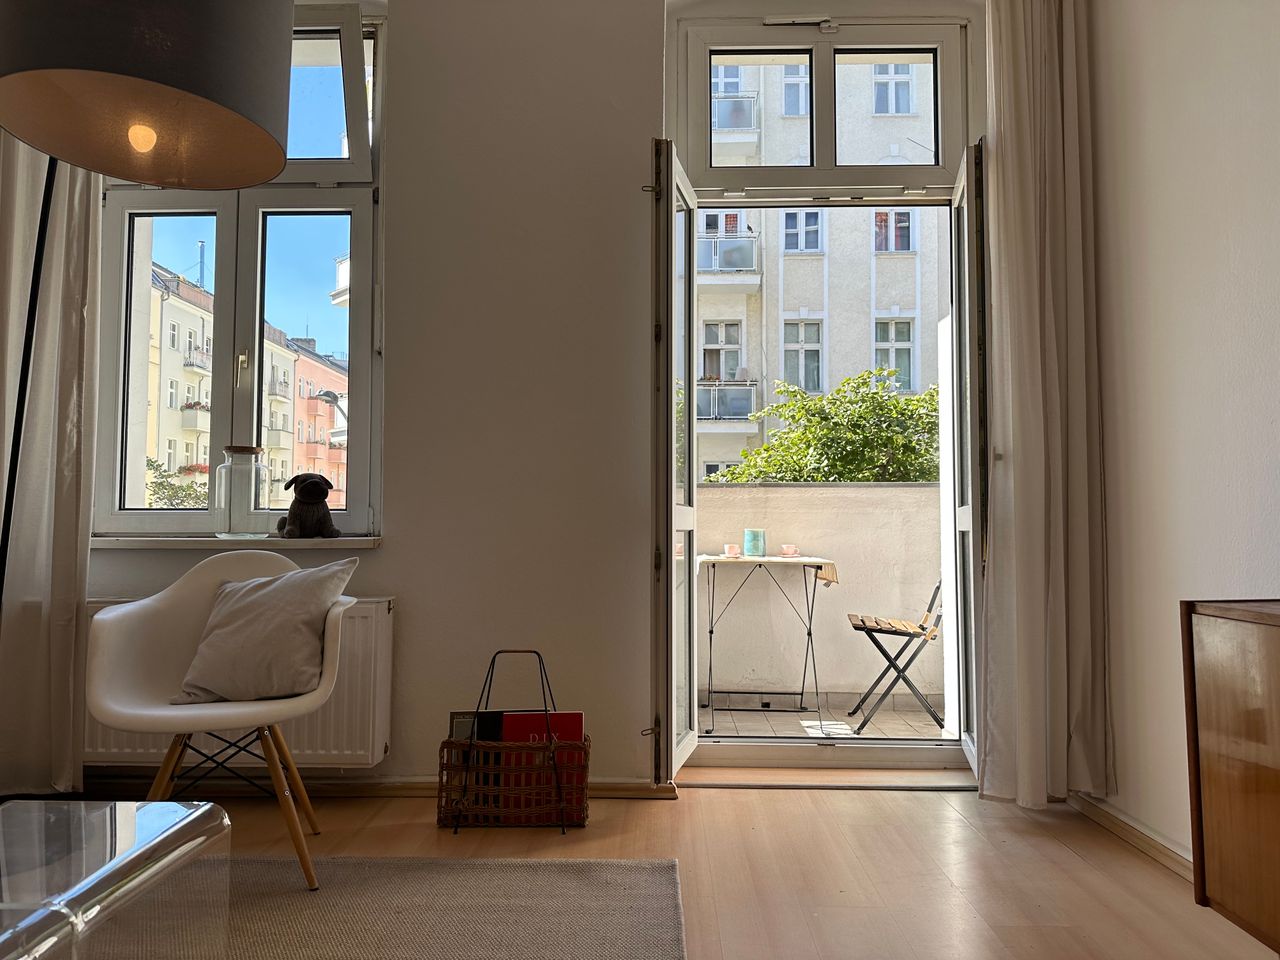 Modern, spacious Altbau home in prime Location